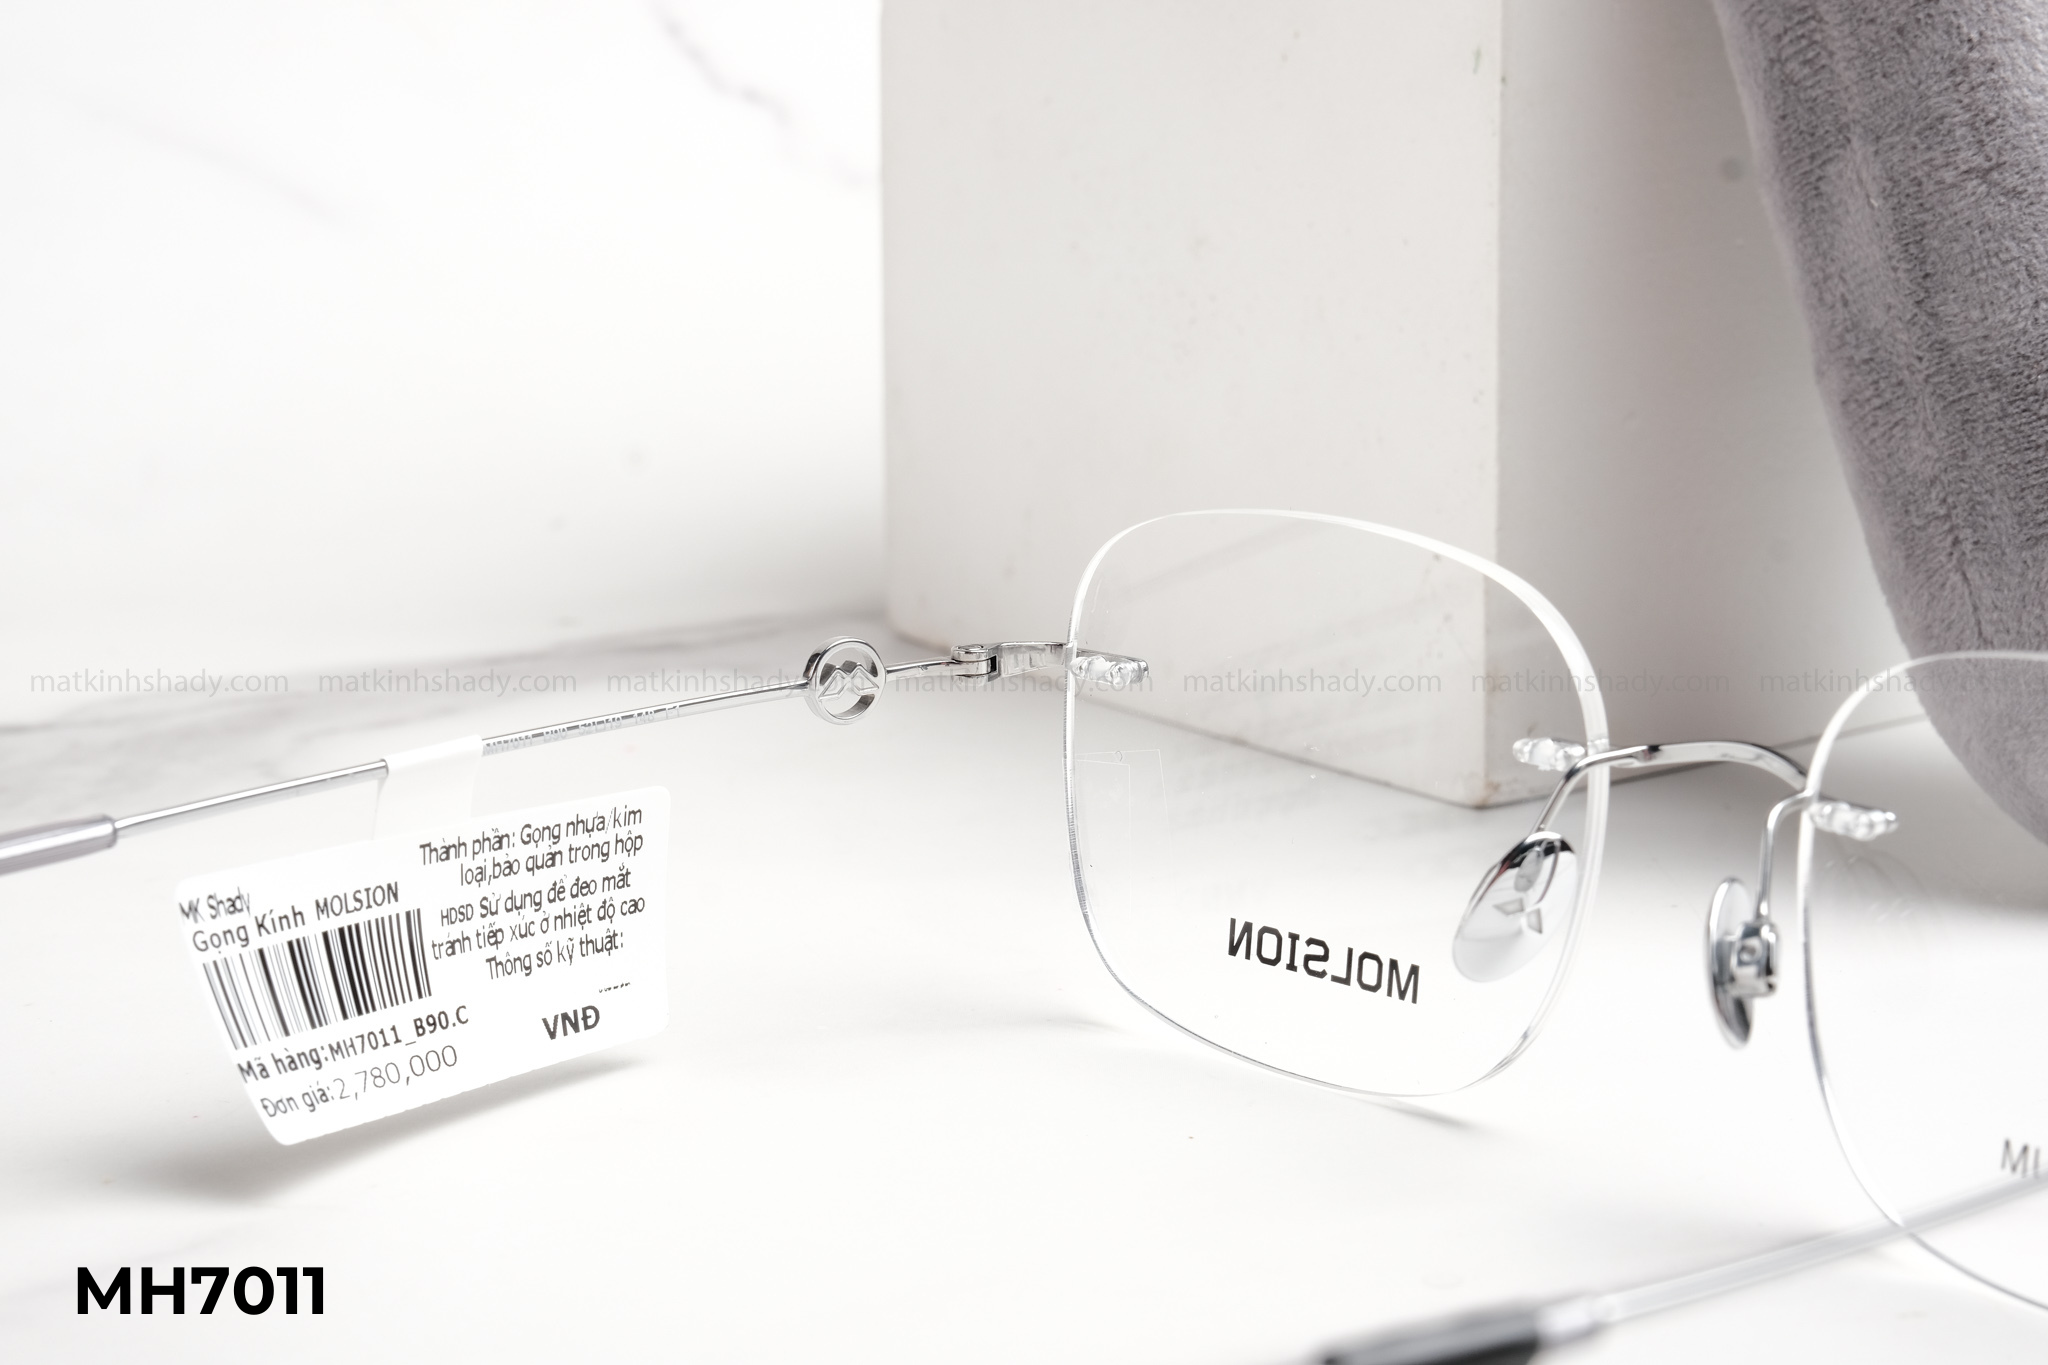  Molsion Eyewear - Glasses - MH7011 